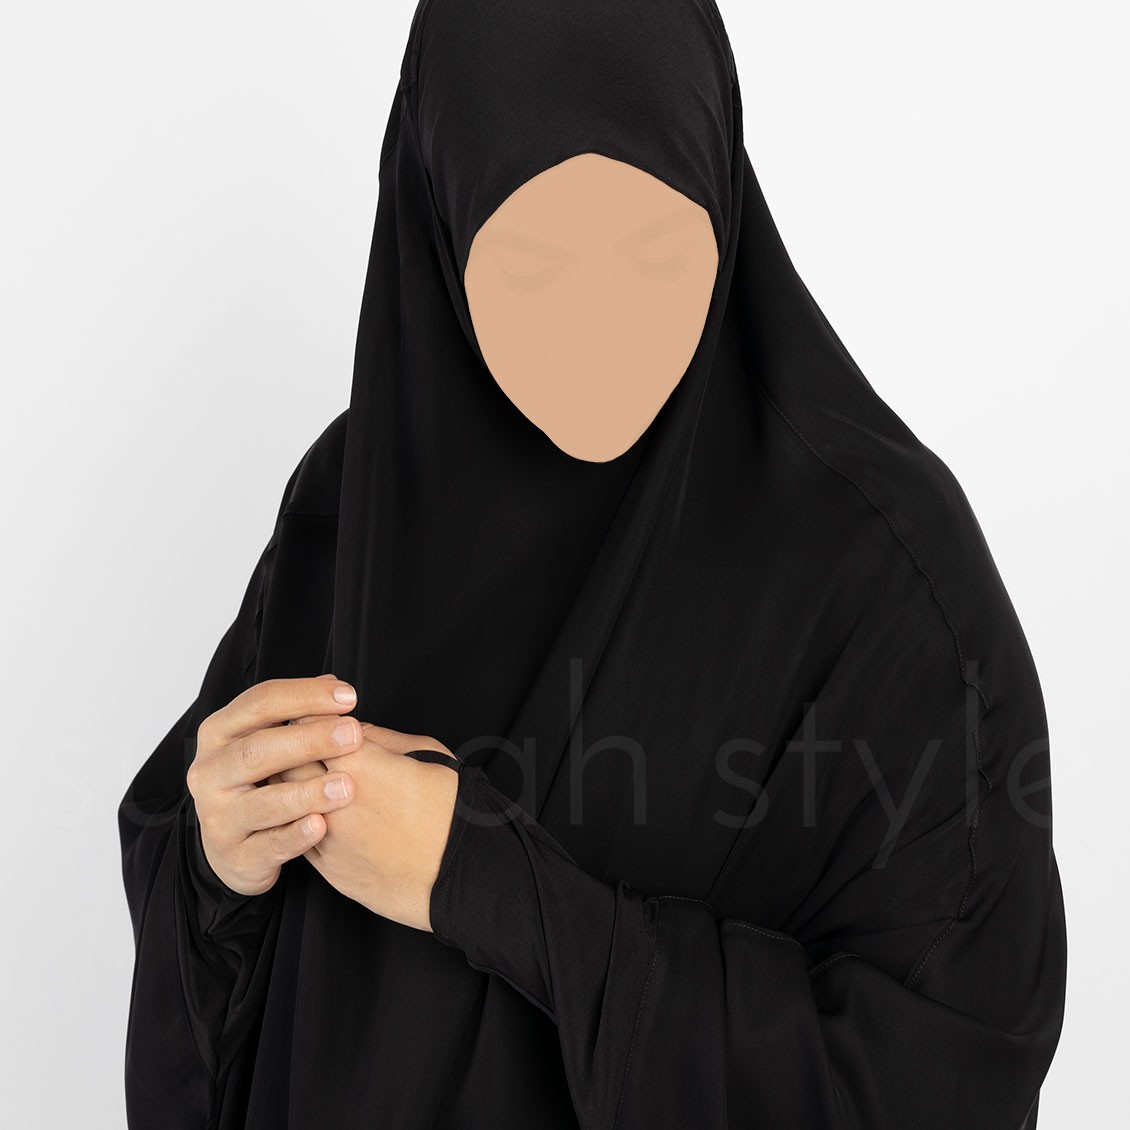 Sunnah Style Signature Jilbab Top Knee Length Black